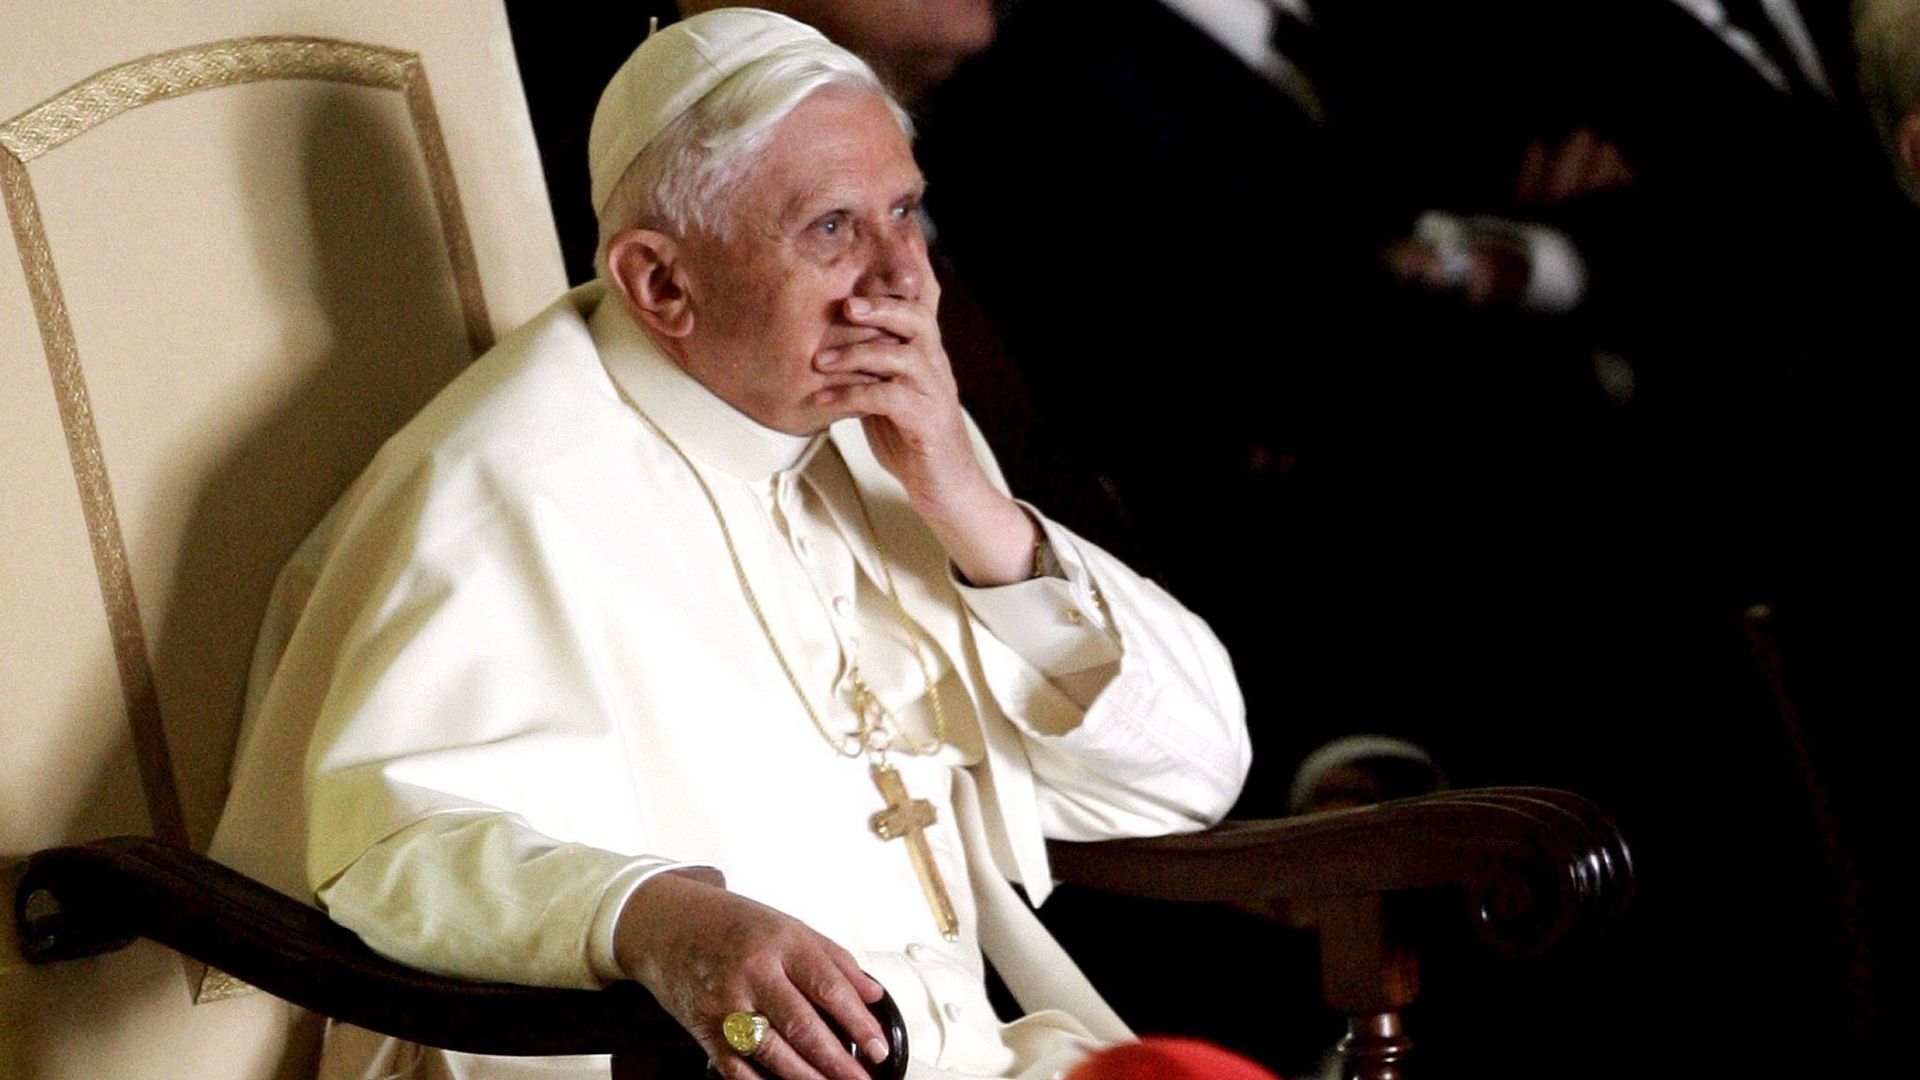 POPE AT SCREENING OF FILM ON LIFE OF JOHN PAUL II